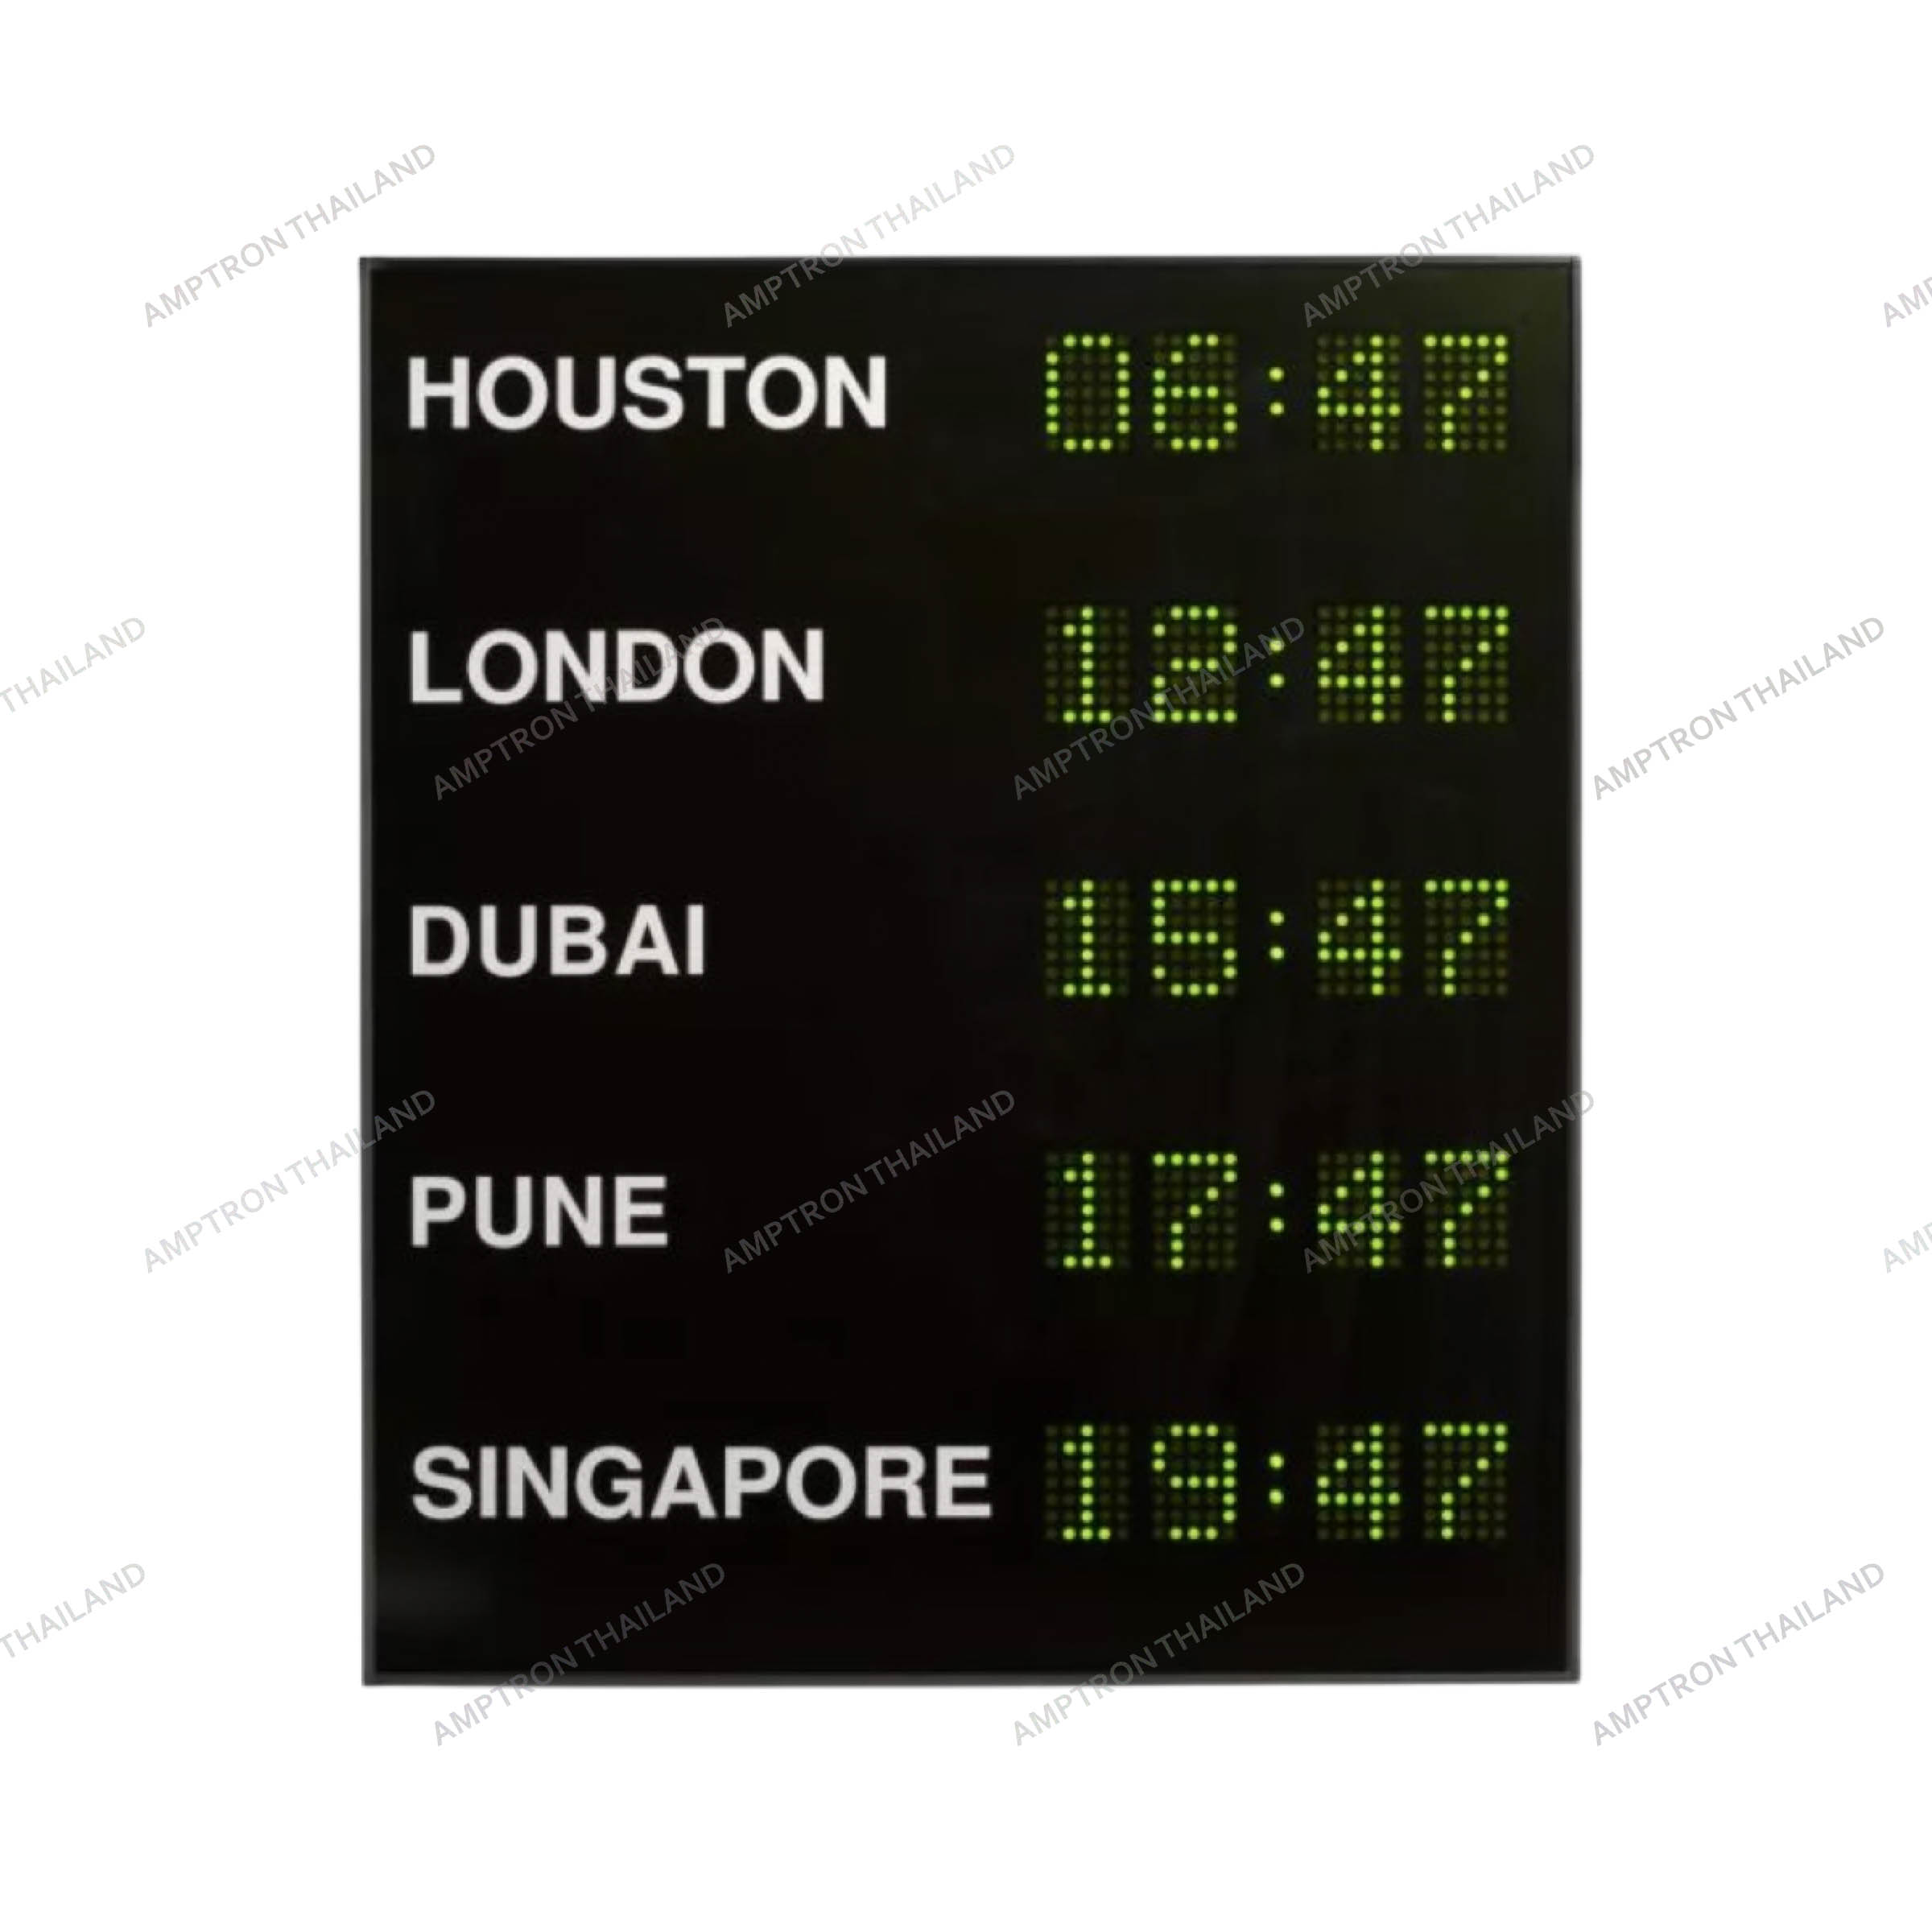 4720N.05 digital world time zone wall clocks with 50mm (2″) digits